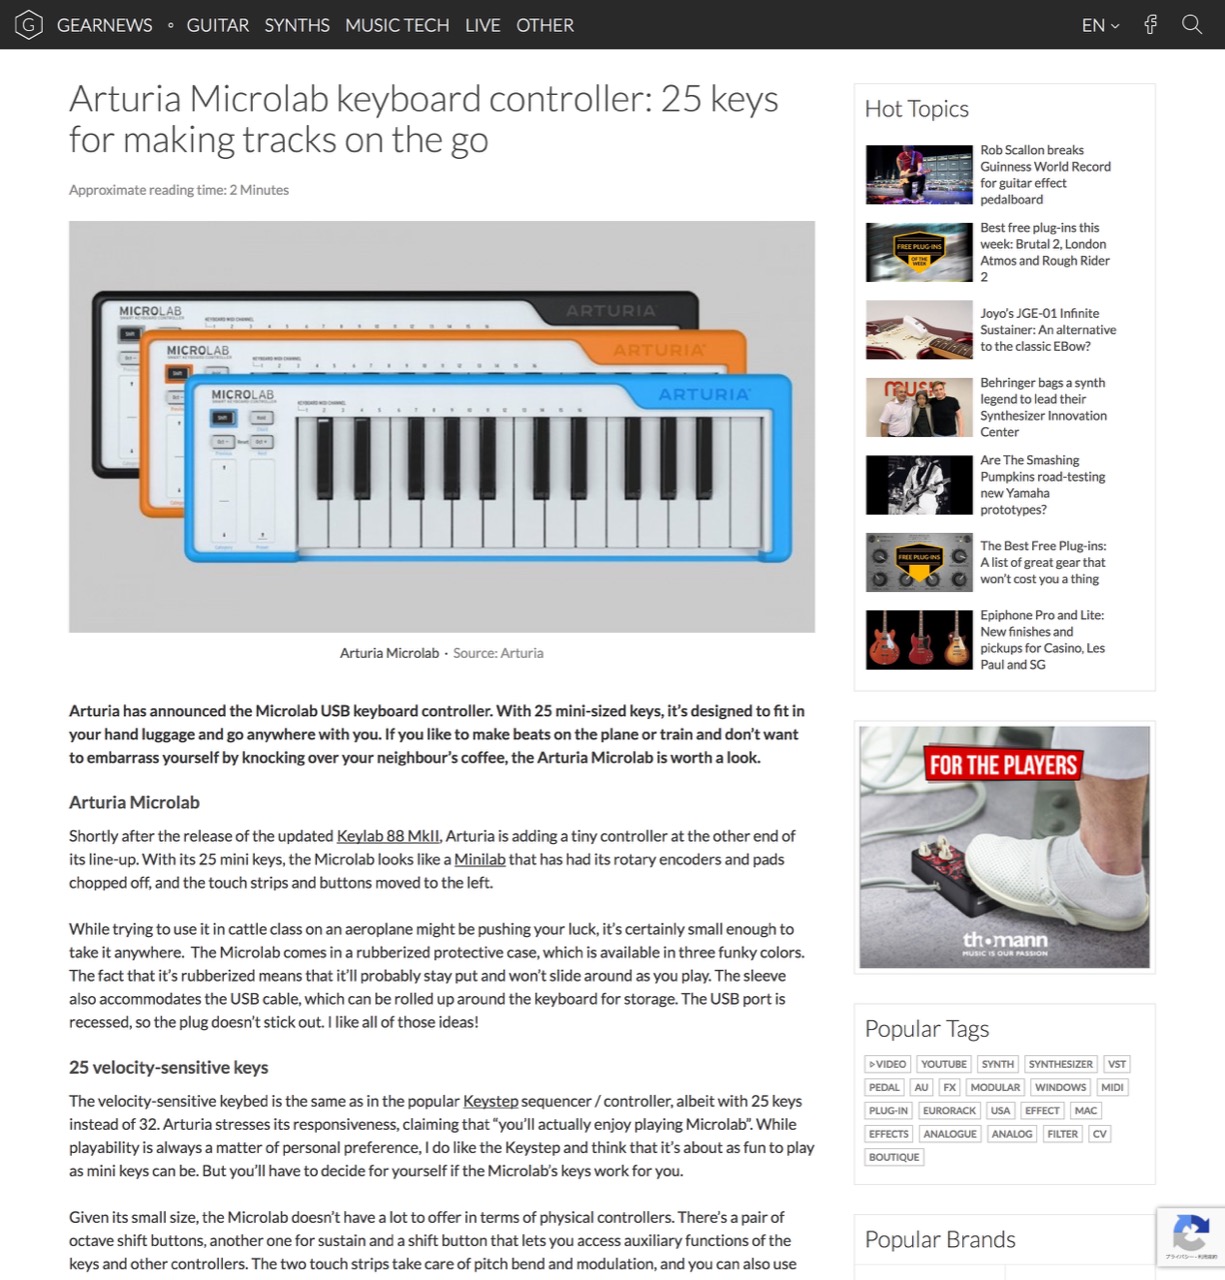 Arturia Microlab keyboard controller: 25 keys for making tracks on the go - gearnews.com